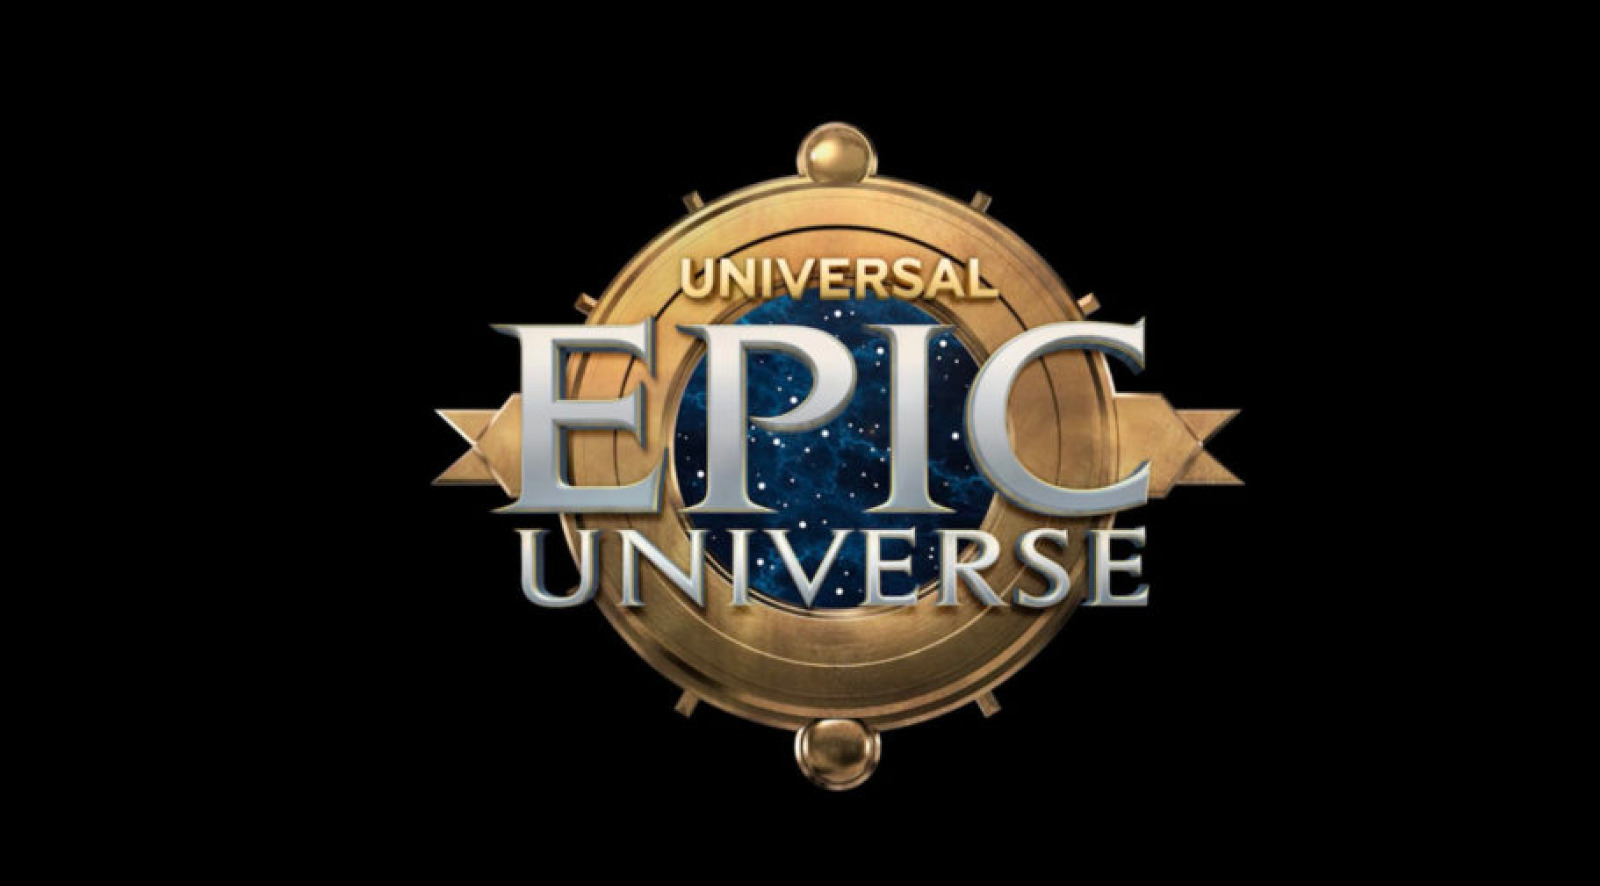 Universal Orlando EPIC Universe Logo Car Fridge Magnet 4\